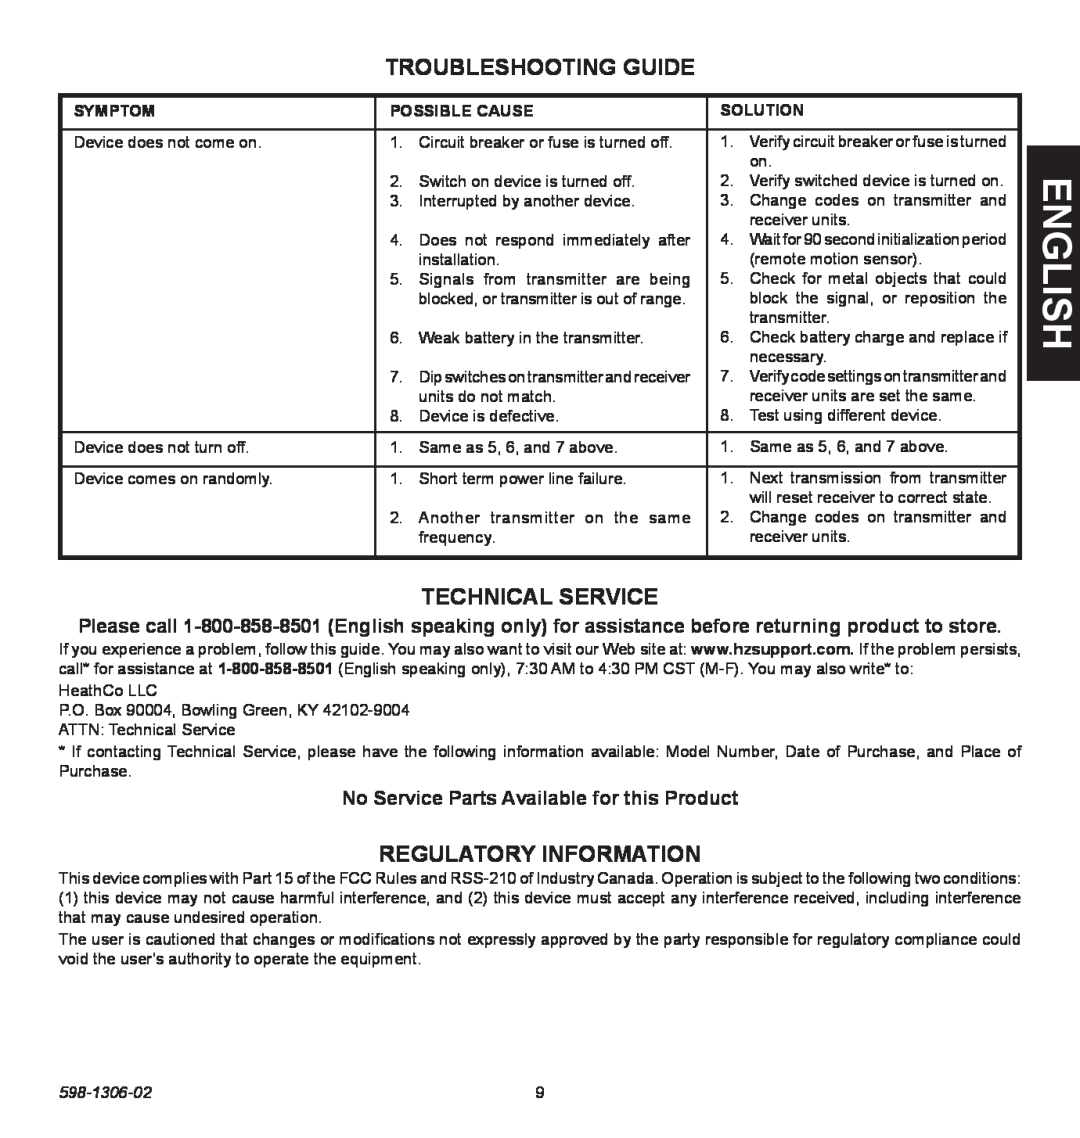 Heath Zenith 598-1306-02 manual Troubleshooting Guide, Technical Service, Regulatory Information 